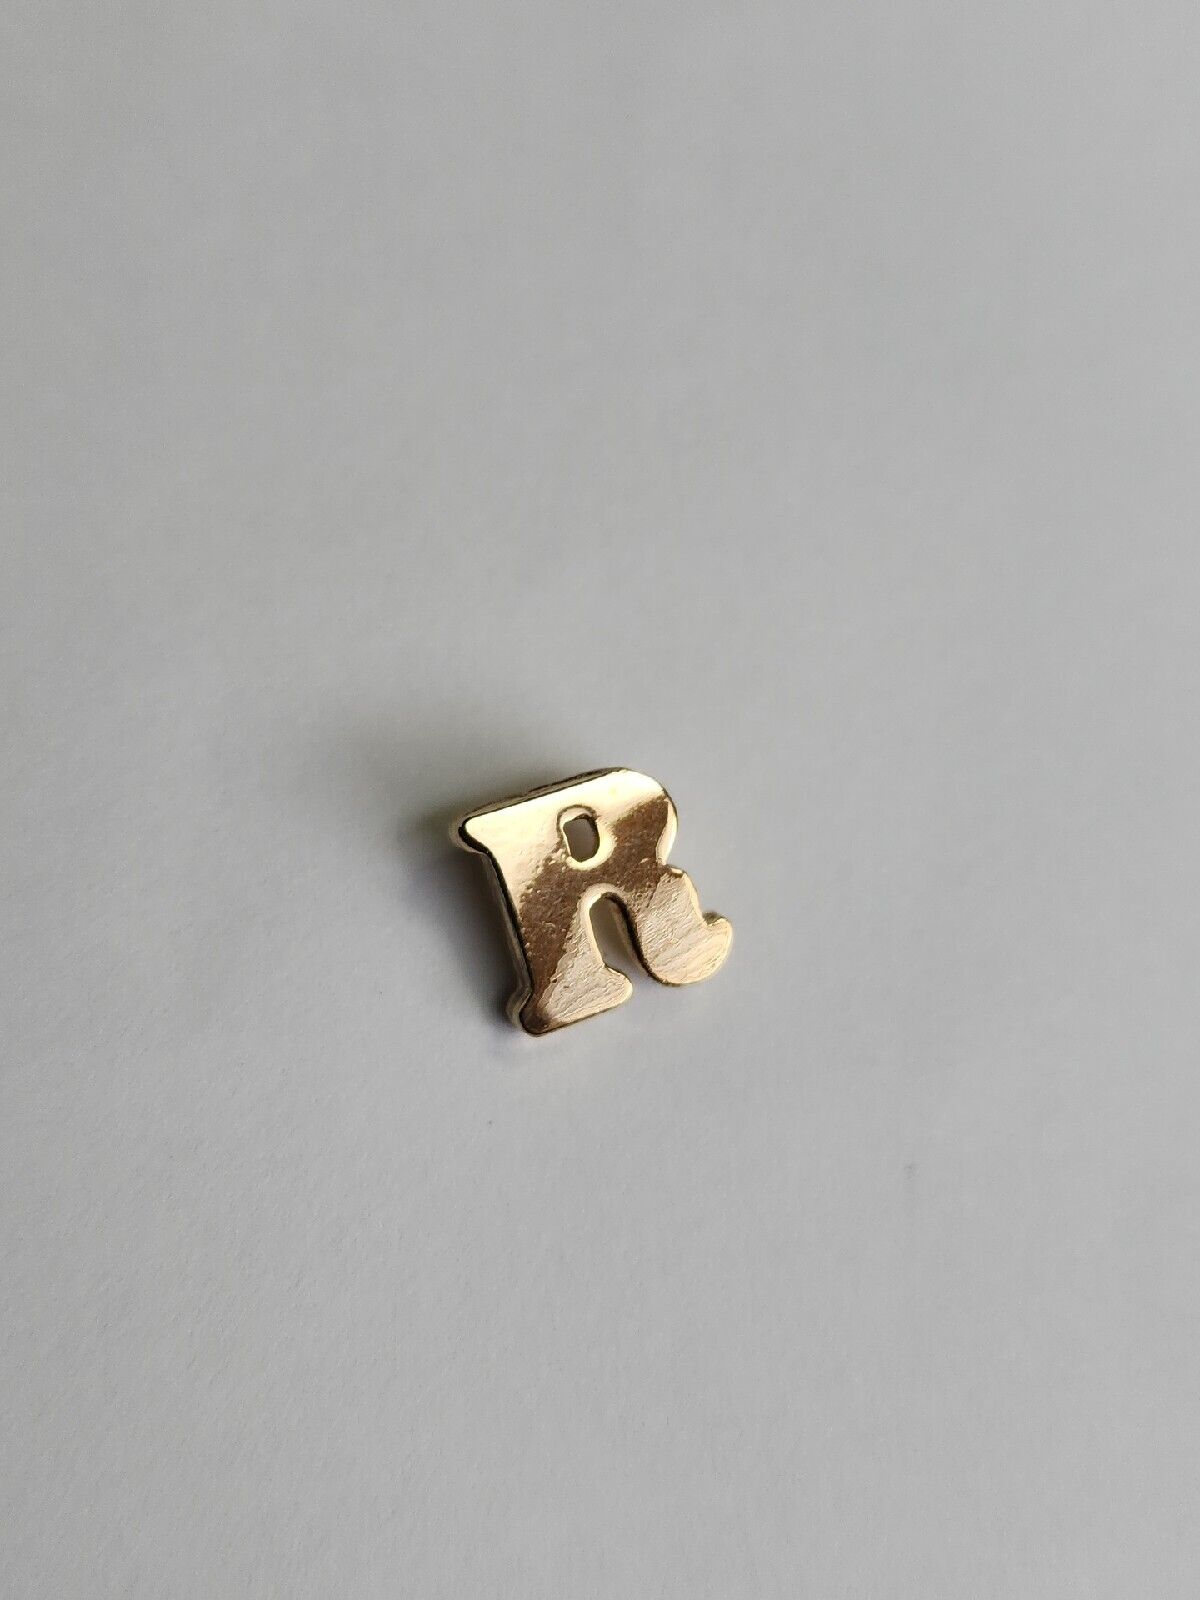 Avon Letter R Tie Tack Lapel Pin Gold Color Metal Initial